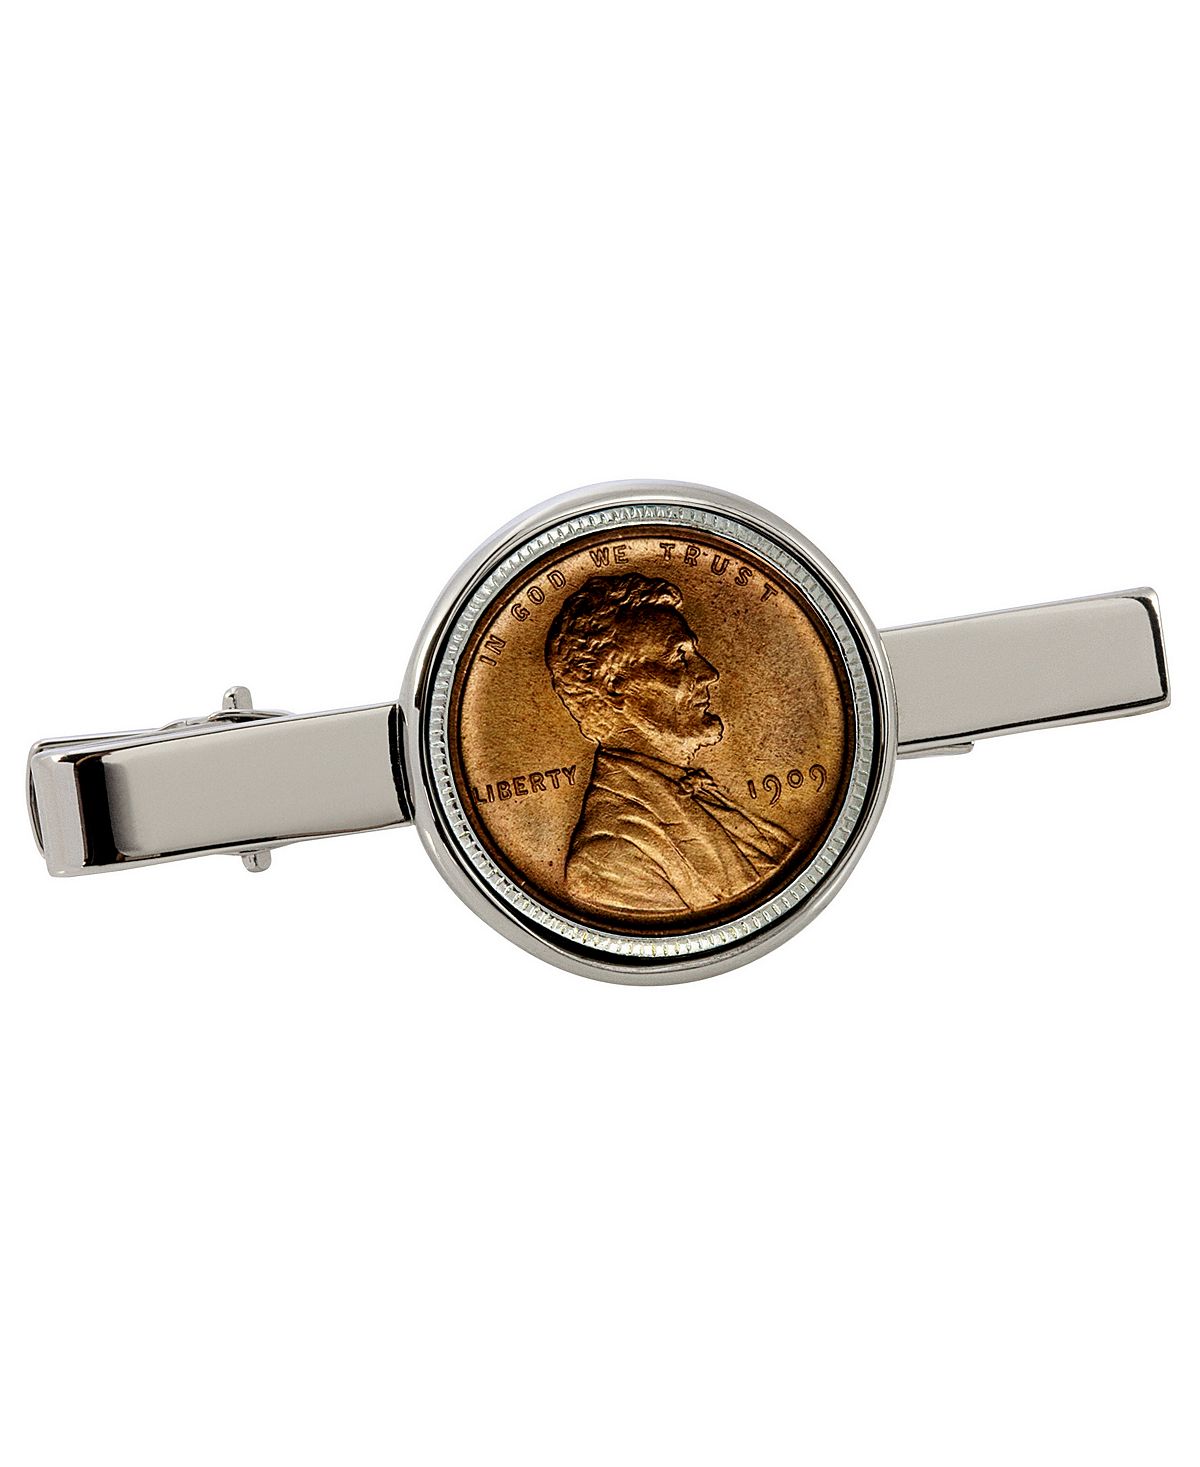 Зажим для галстука для монеты «Линкольн Пенни» первого года выпуска 1909 года American Coin Treasures russia 1727 silver plated brass commemorative collectible coin gift lucky challenge coin